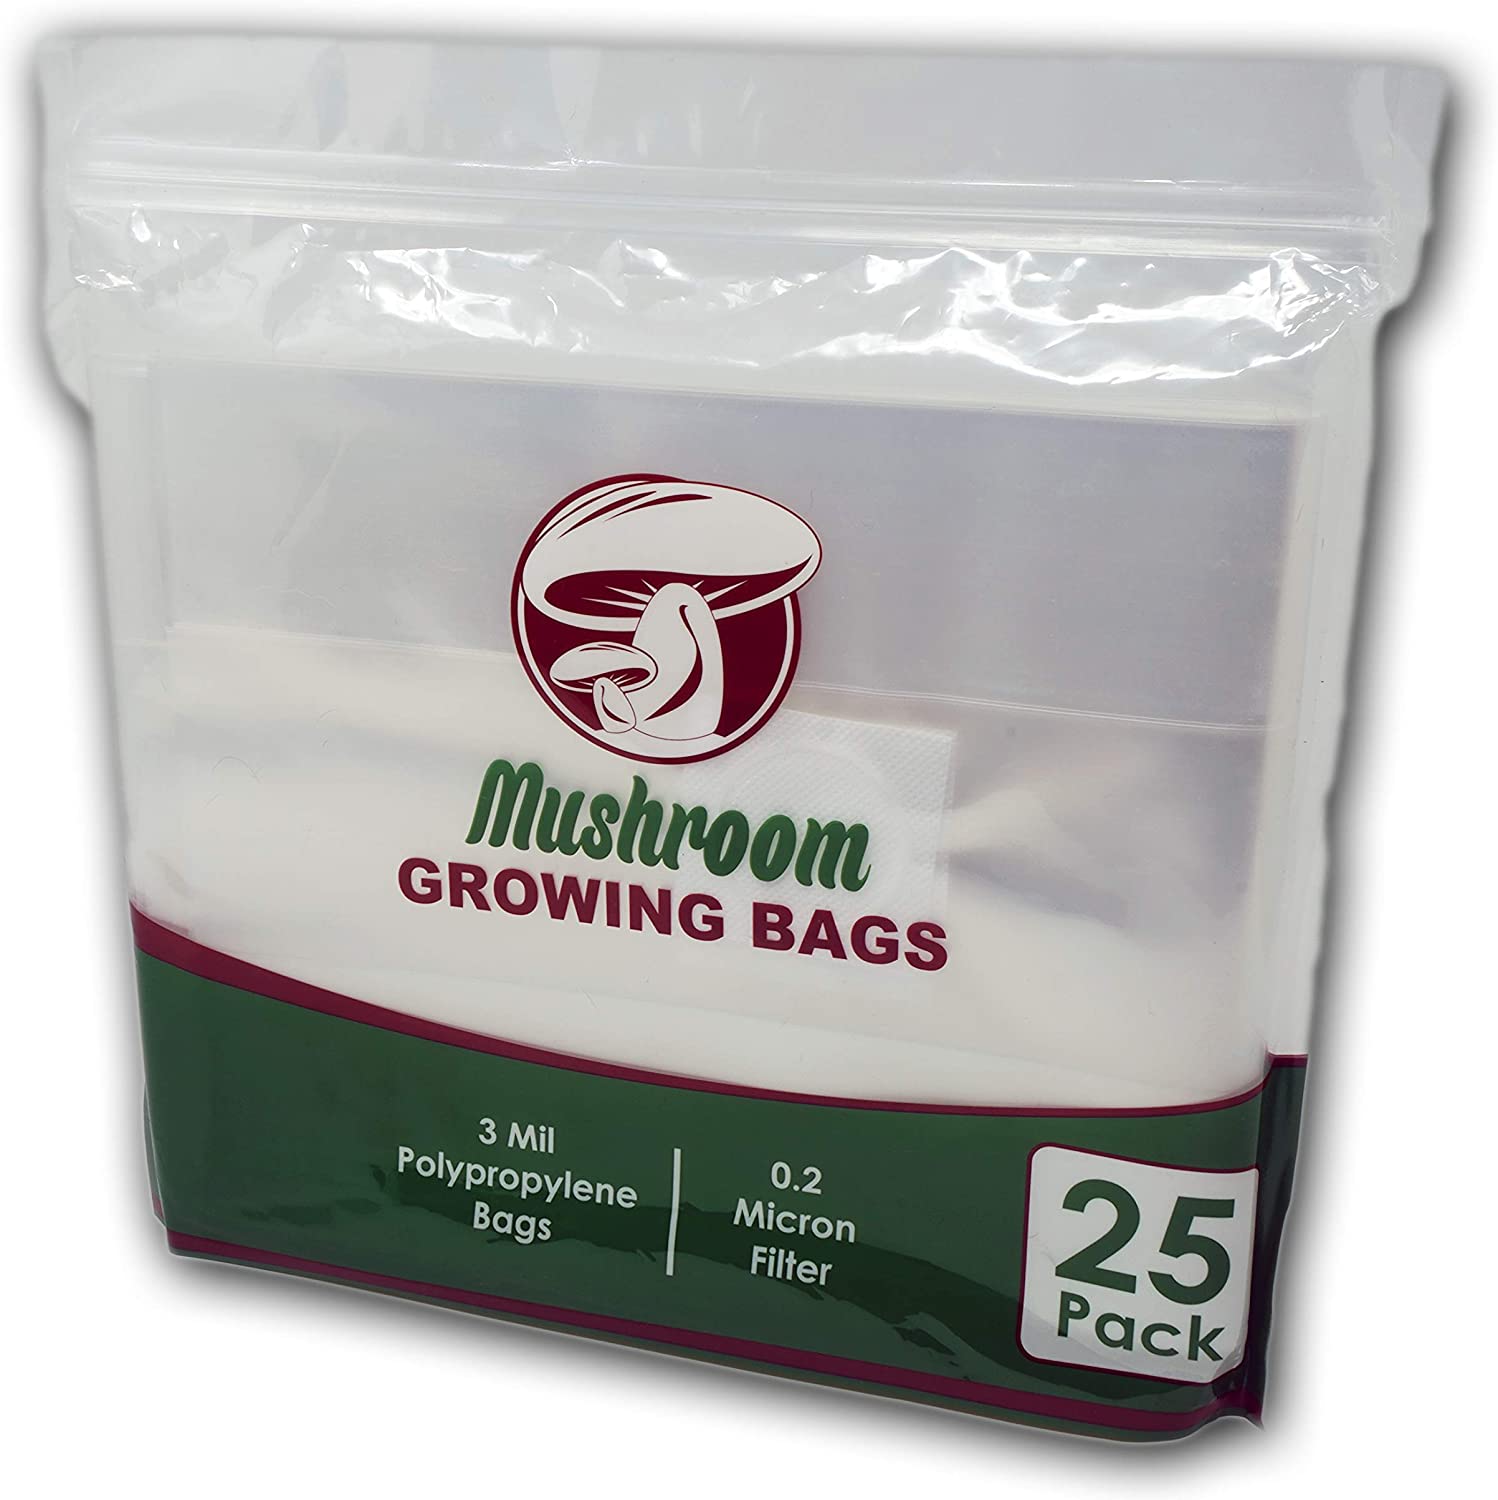 Middle Size 5 X 5 X 19 0.2 Micron Filter Root Mushroom Farm-10 Count Mushroom Growing Bags/Mushroom Spawn Bags 3 Mil Polypropylene 